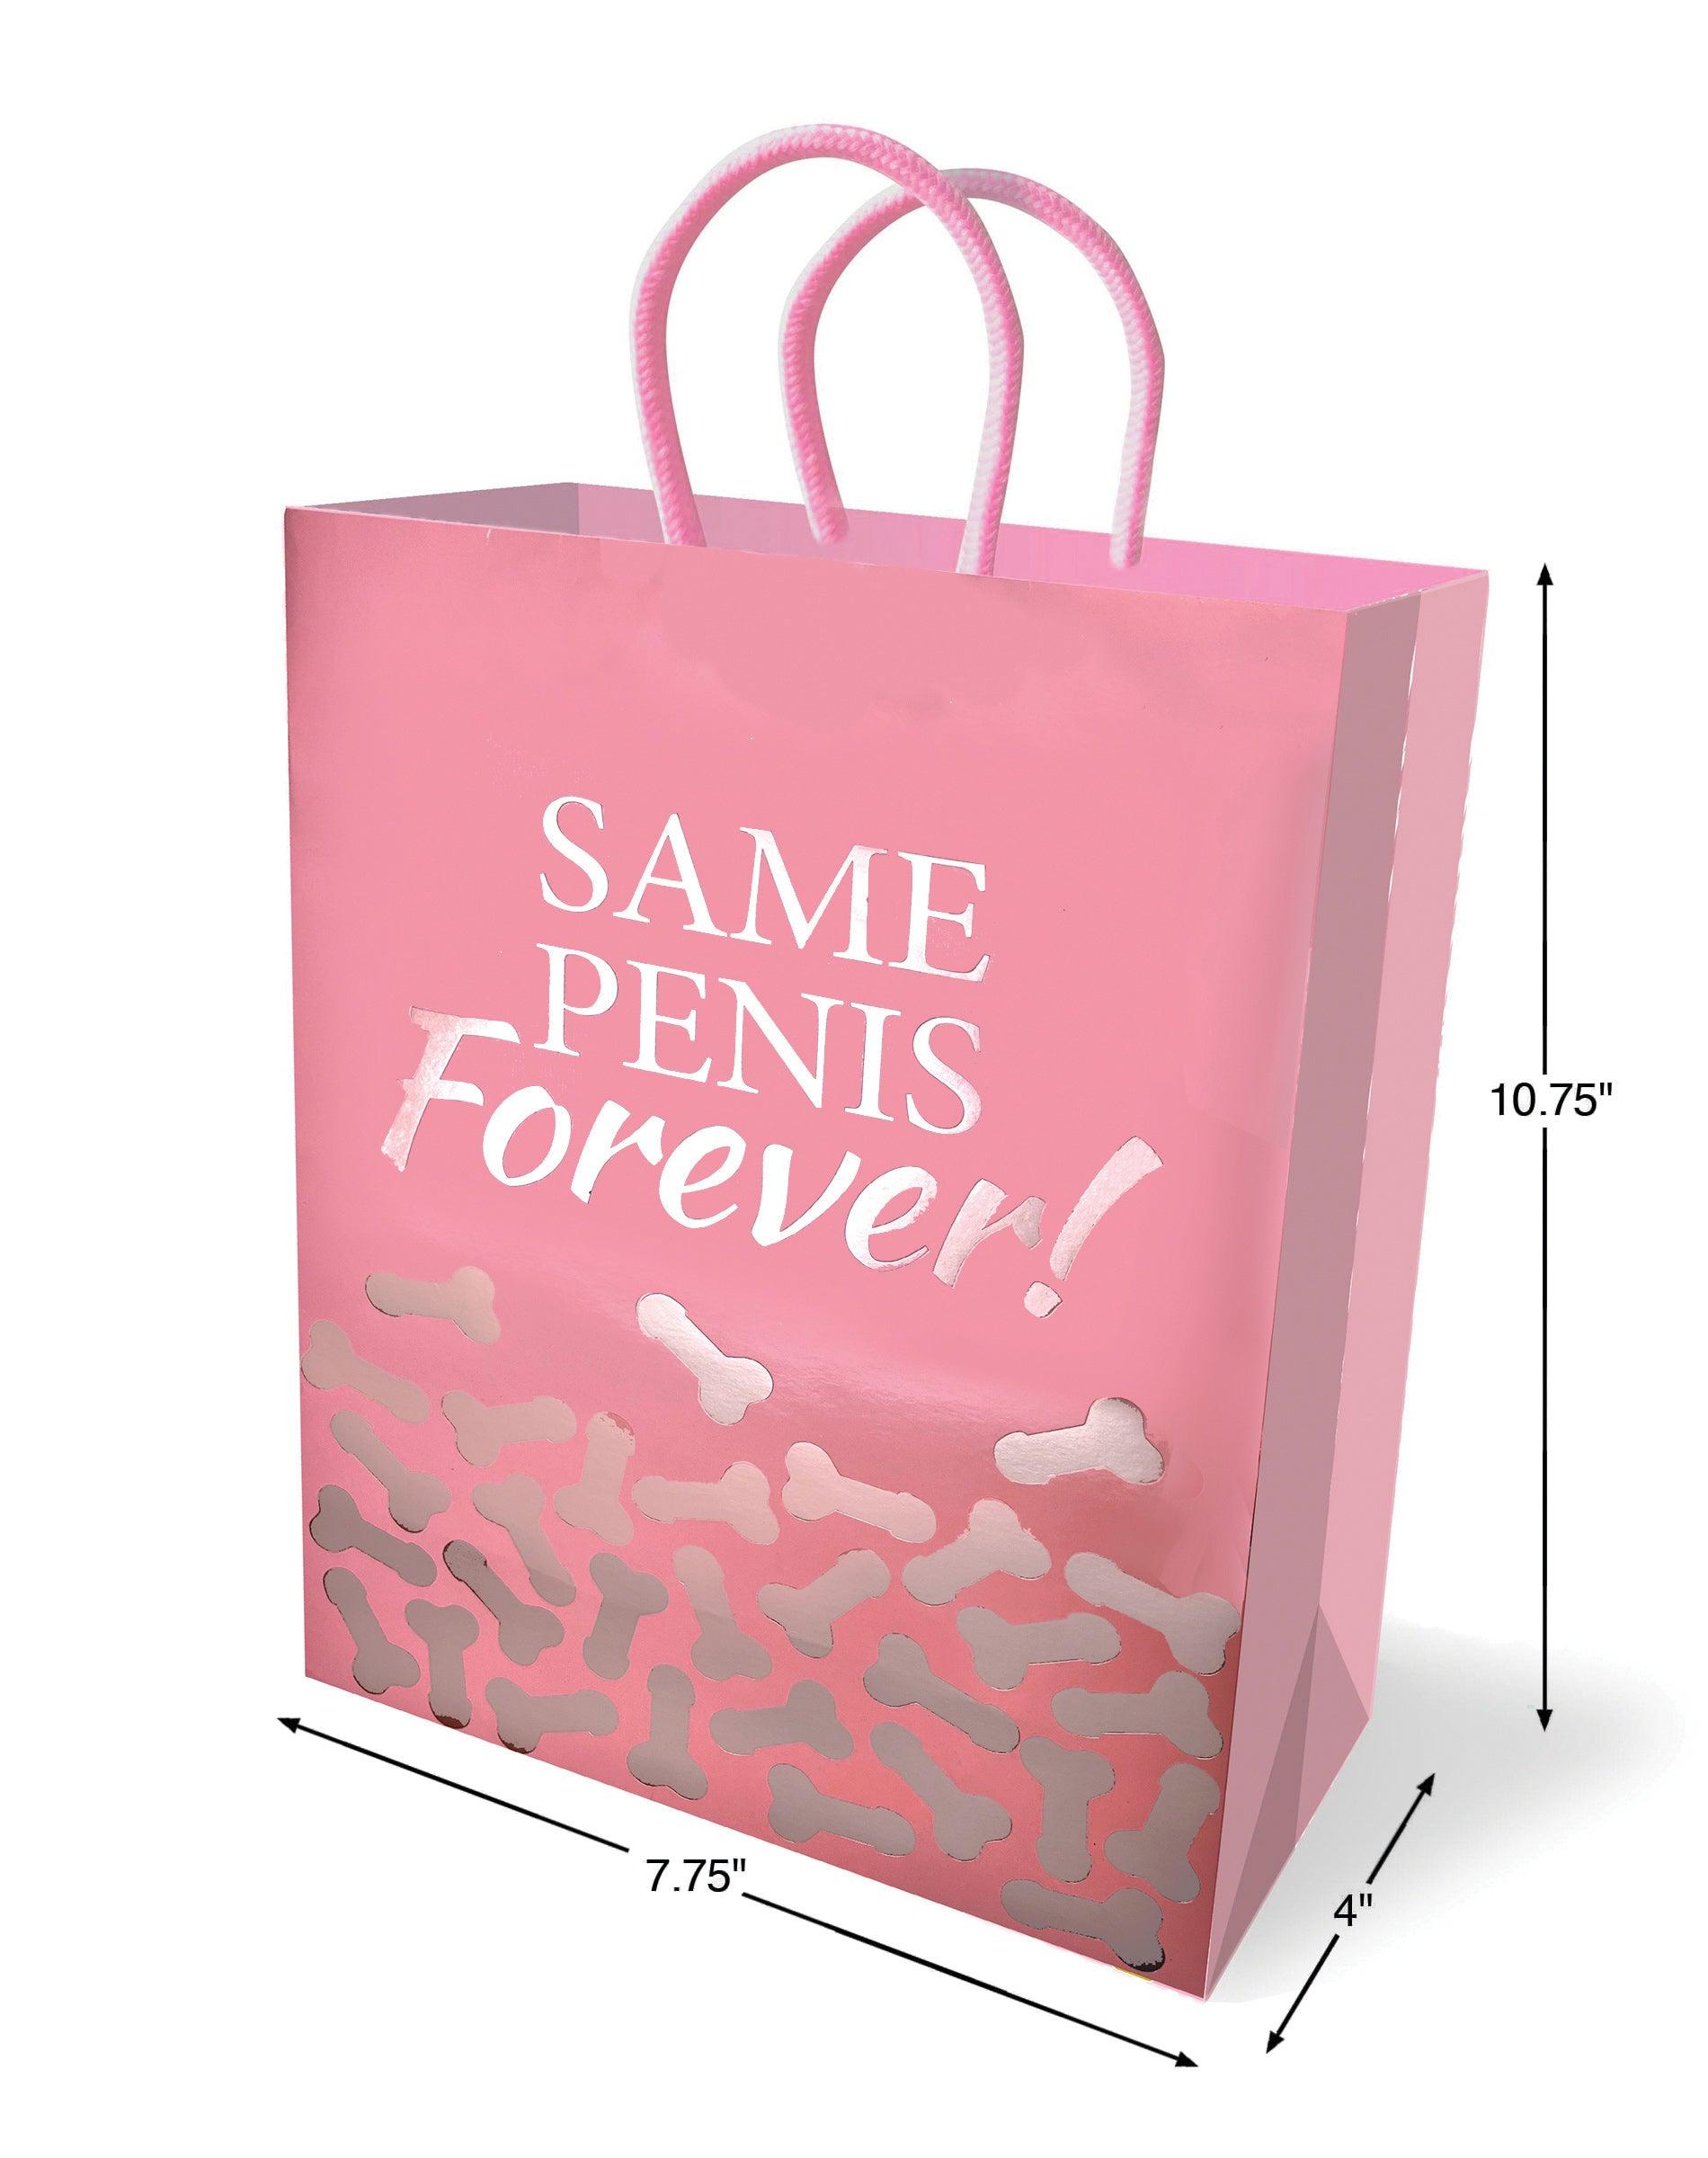 Same Penis Forever - Gift Bag - My Sex Toy Hub